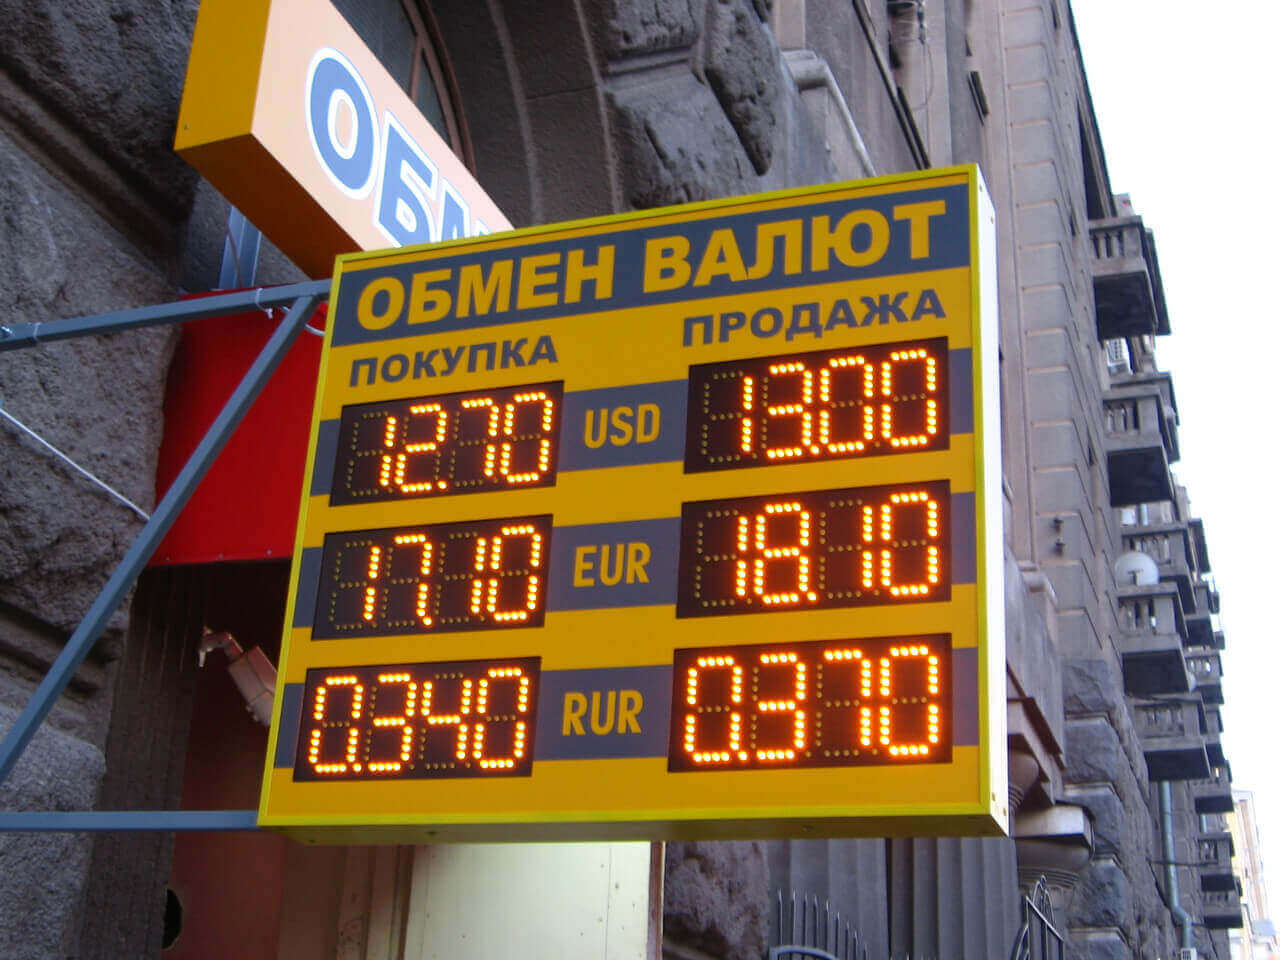 обмен валют в украине онлайн